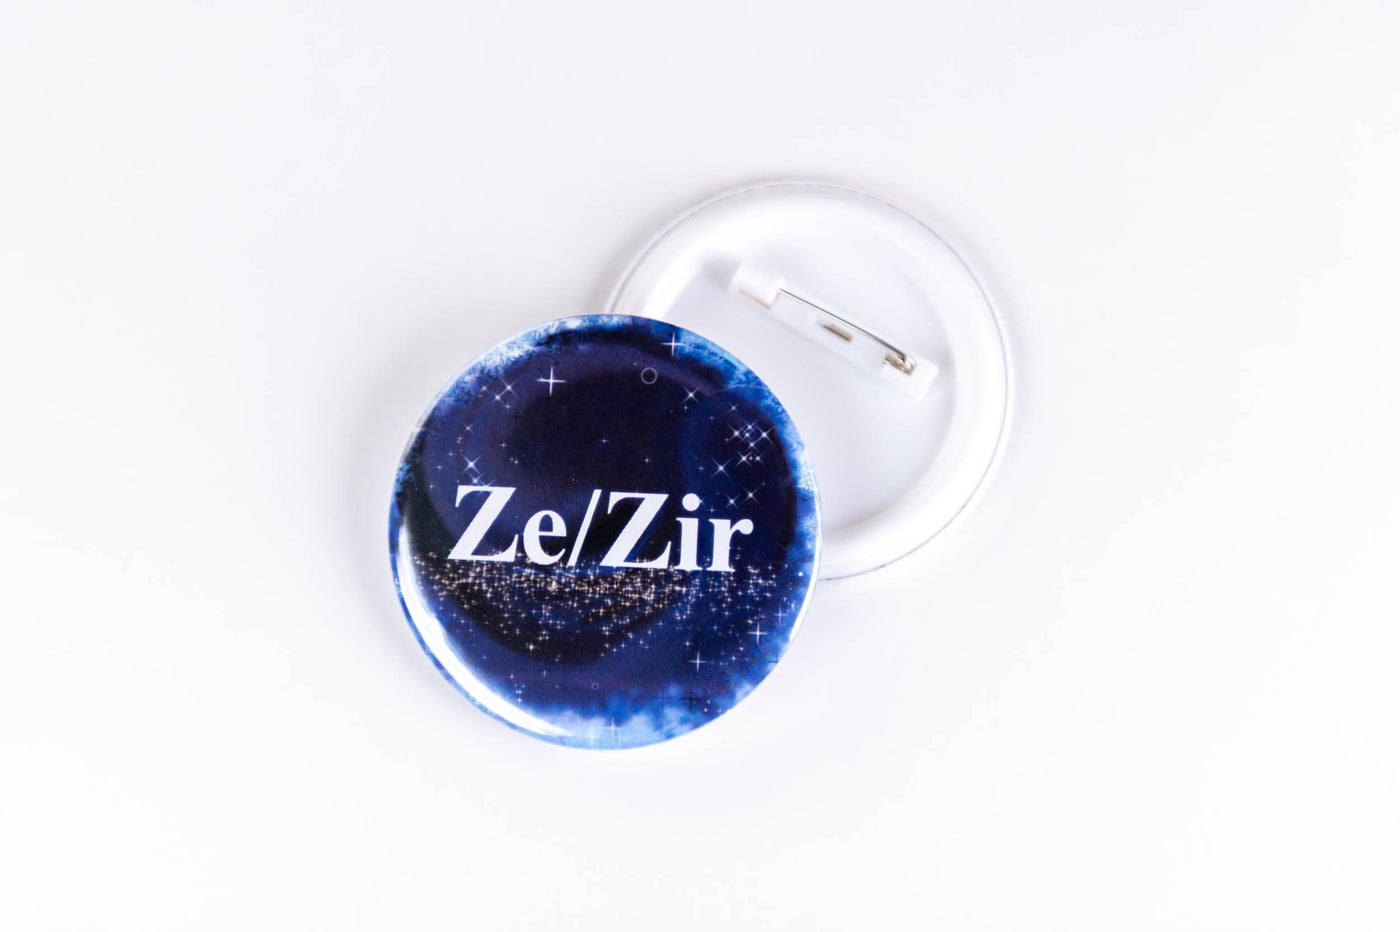 Accessory Pride Pronoun LGBT Pin Back Buttons by Princess Pumps Ze/Zir